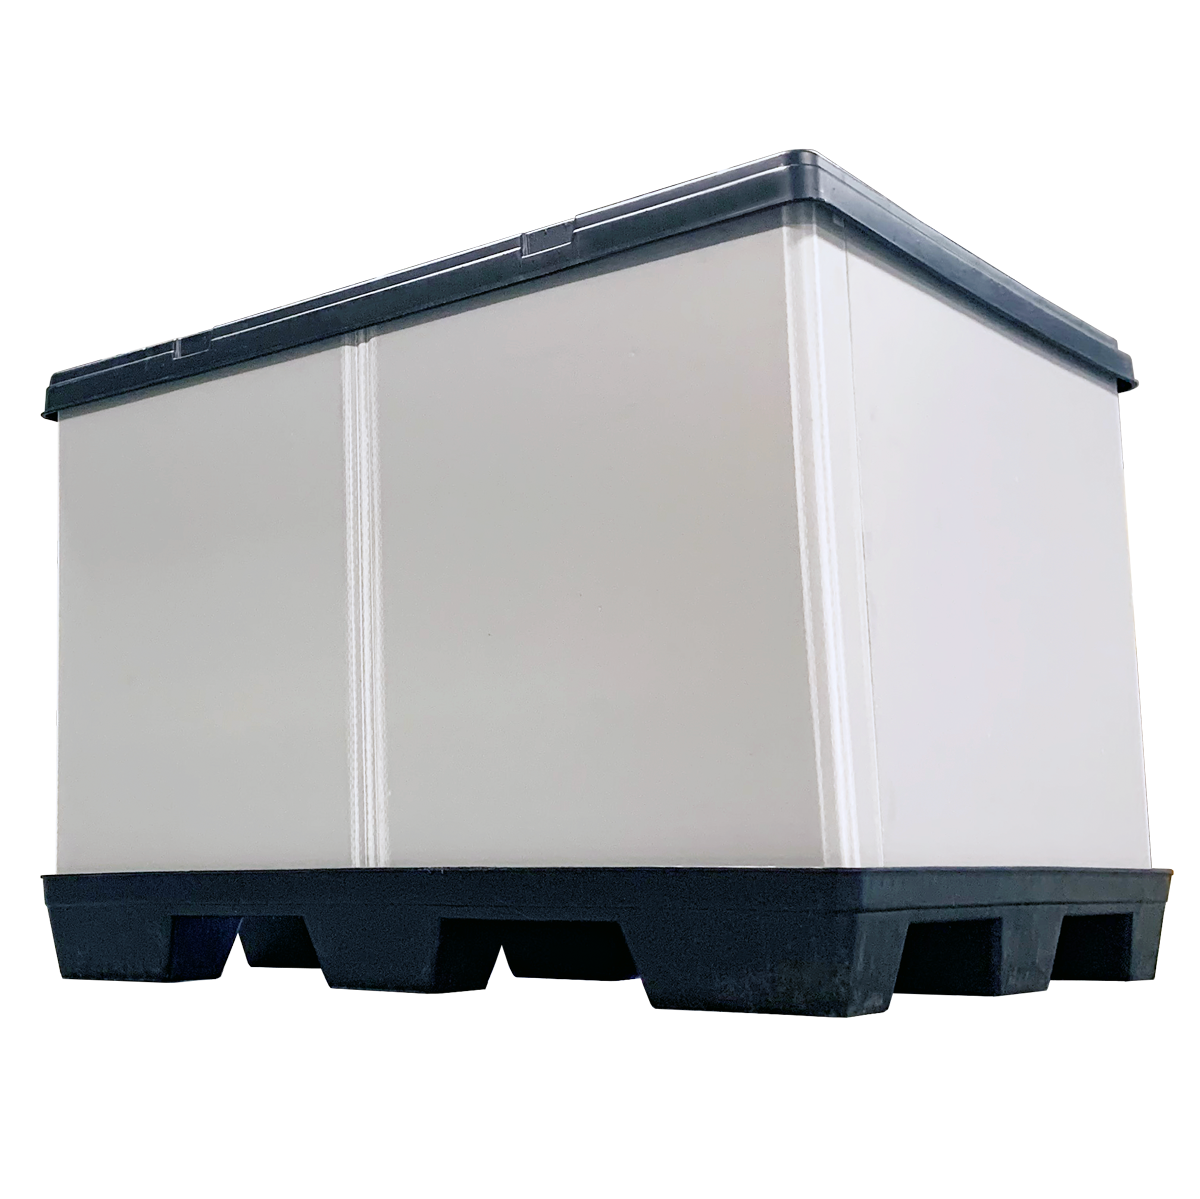 48 x 40 x 45 – Reusable Bulk Container